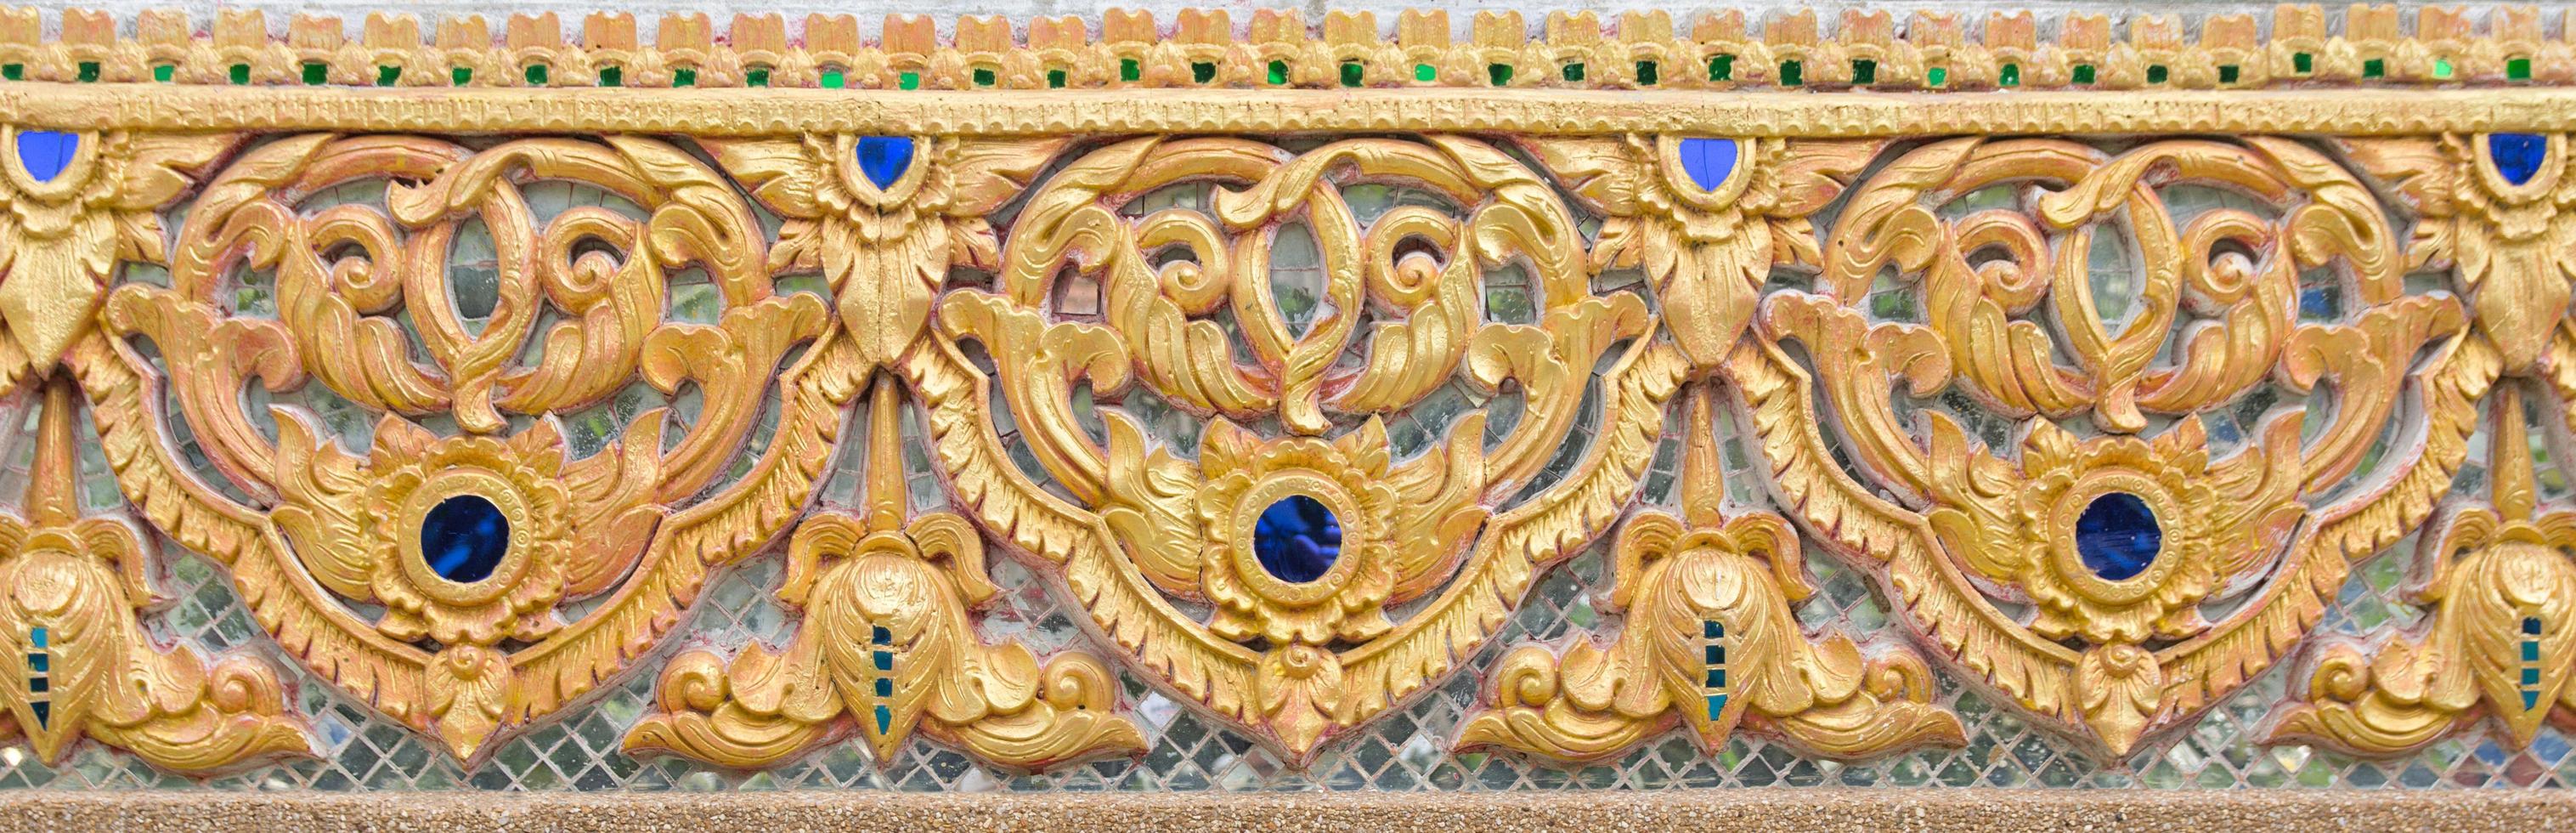 patroon van goud bloem gesneden Aan stucwerk ontwerp van inheems muur, Thais stijl in tempel foto